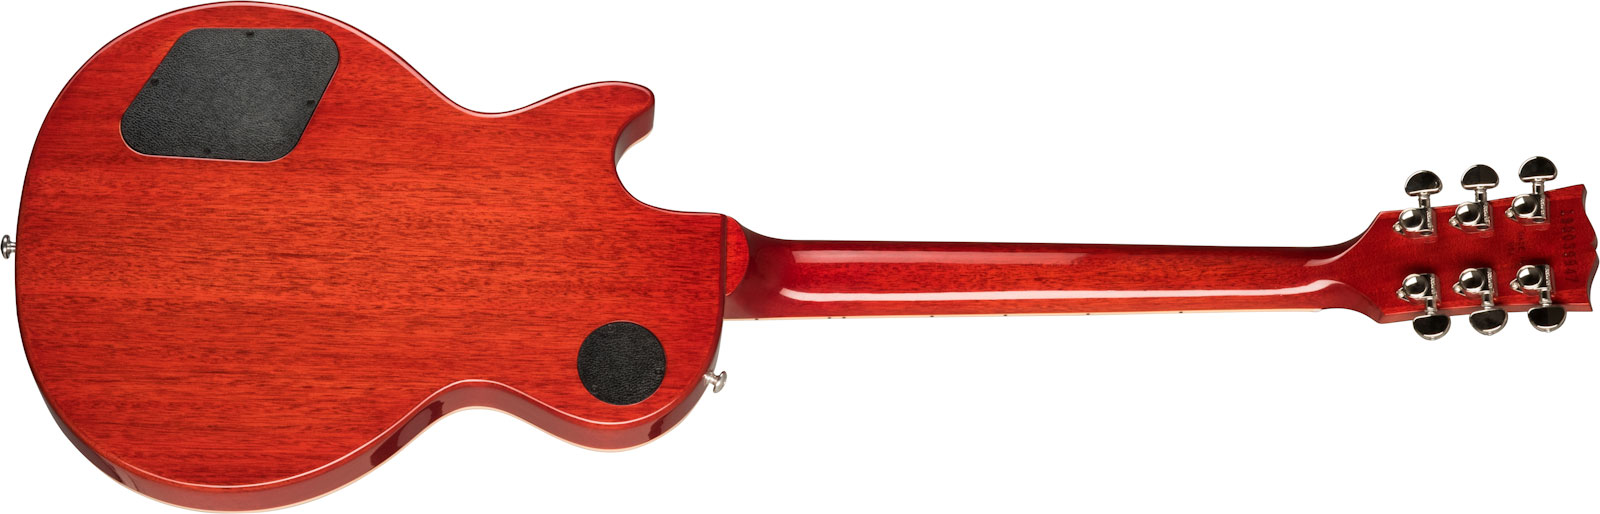 Gibson Les Paul Classic Modern 2h Ht Rw - Trans Cherry - Single cut electric guitar - Variation 1